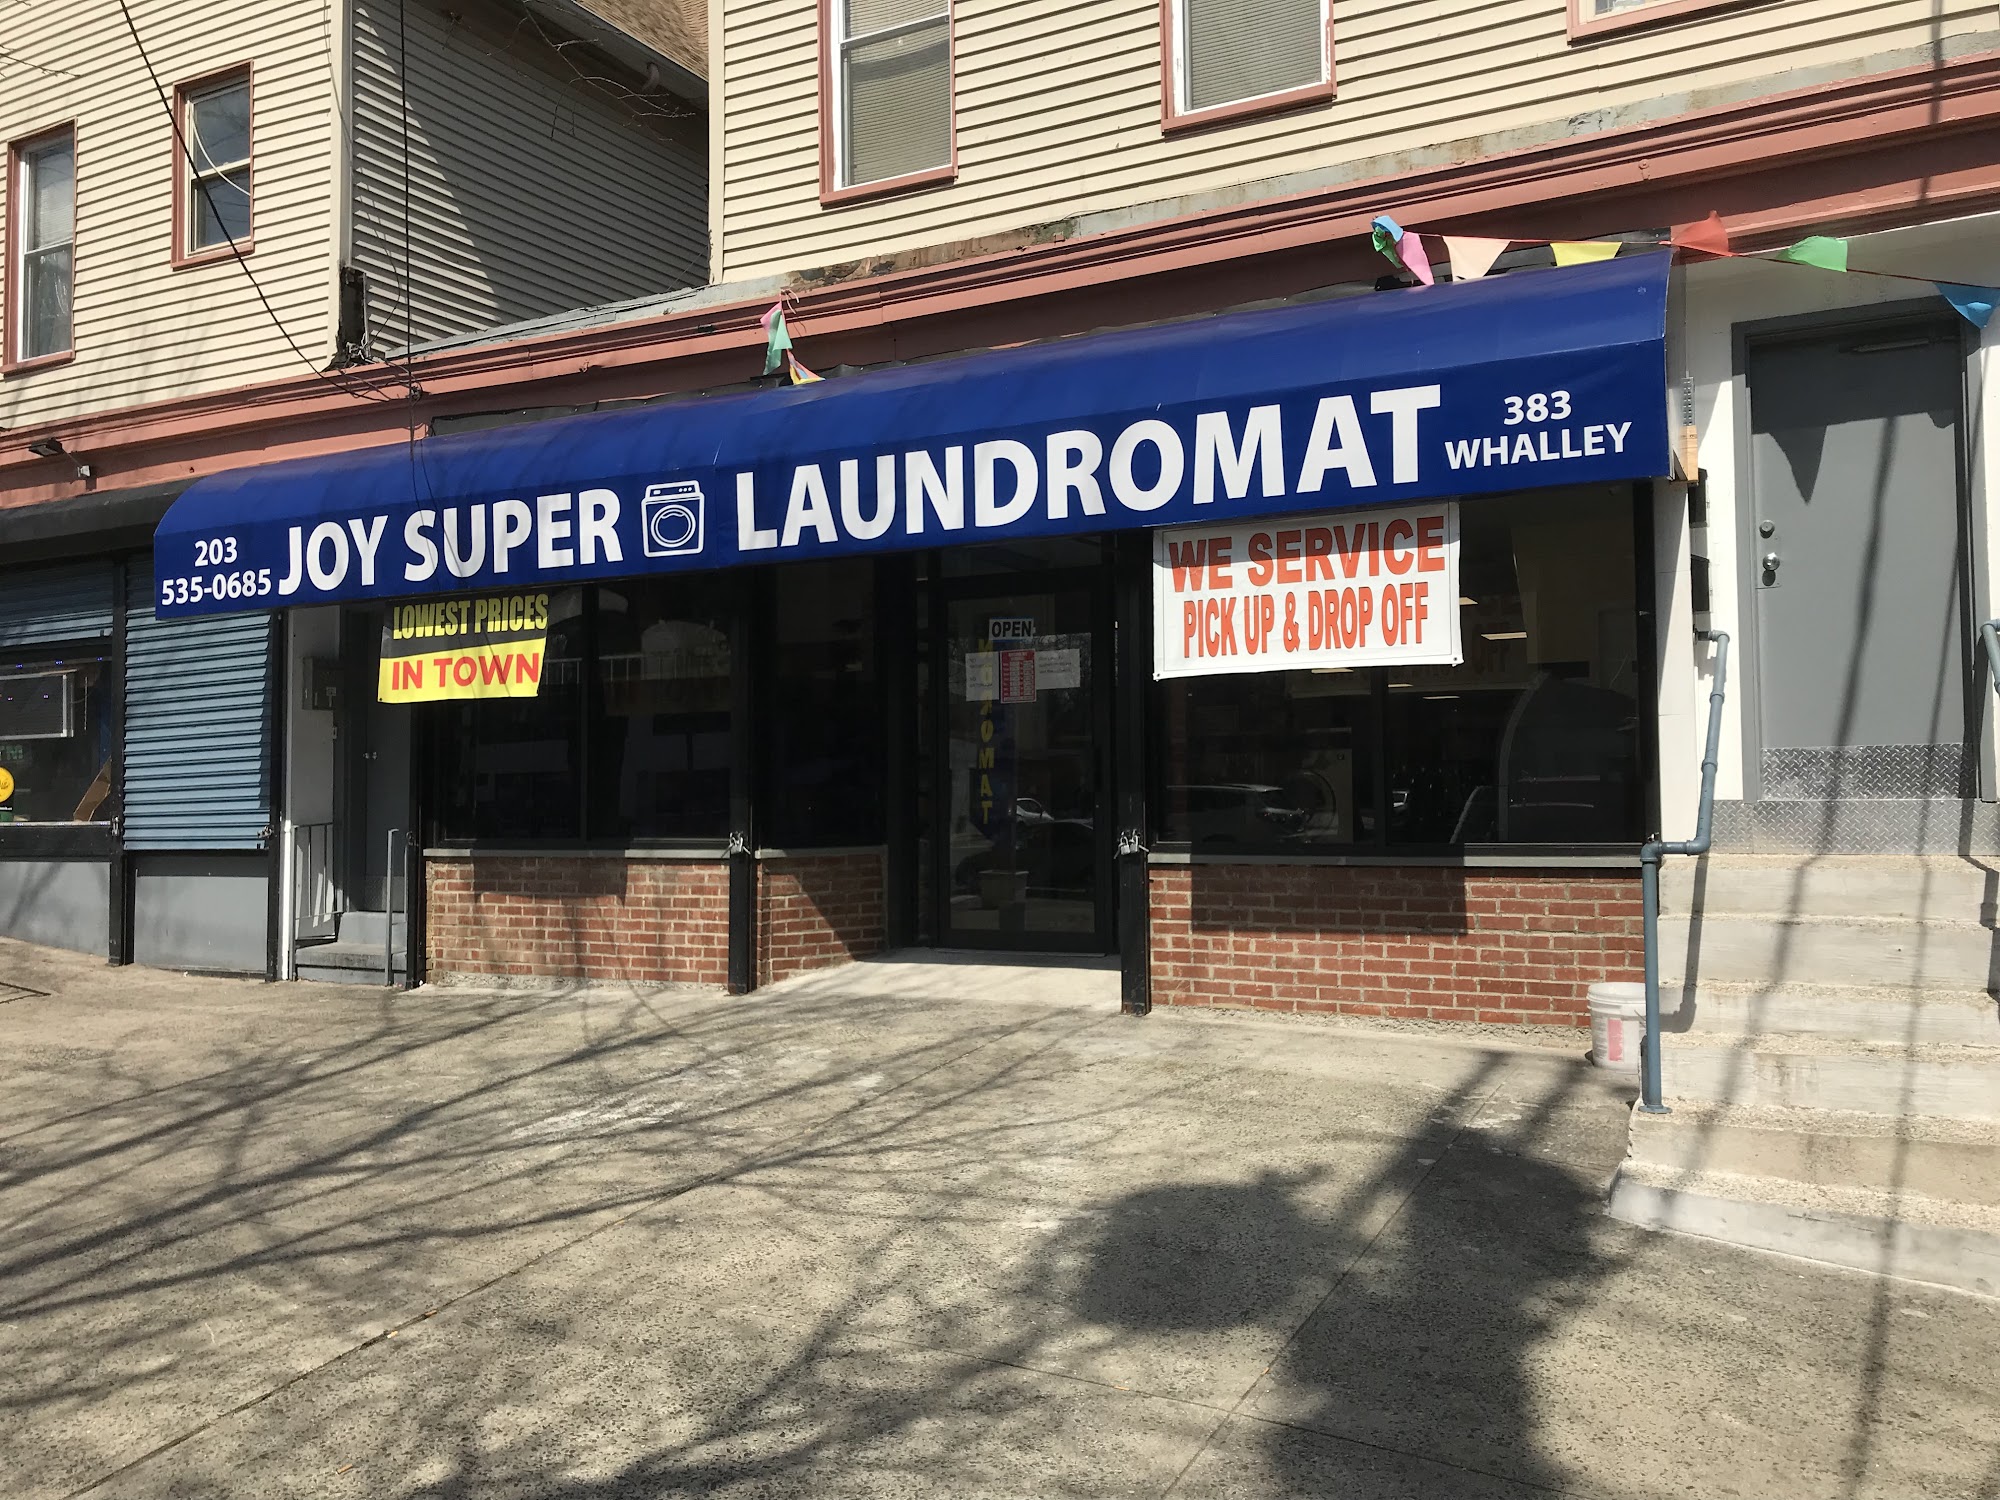 Joy Super Laundromat